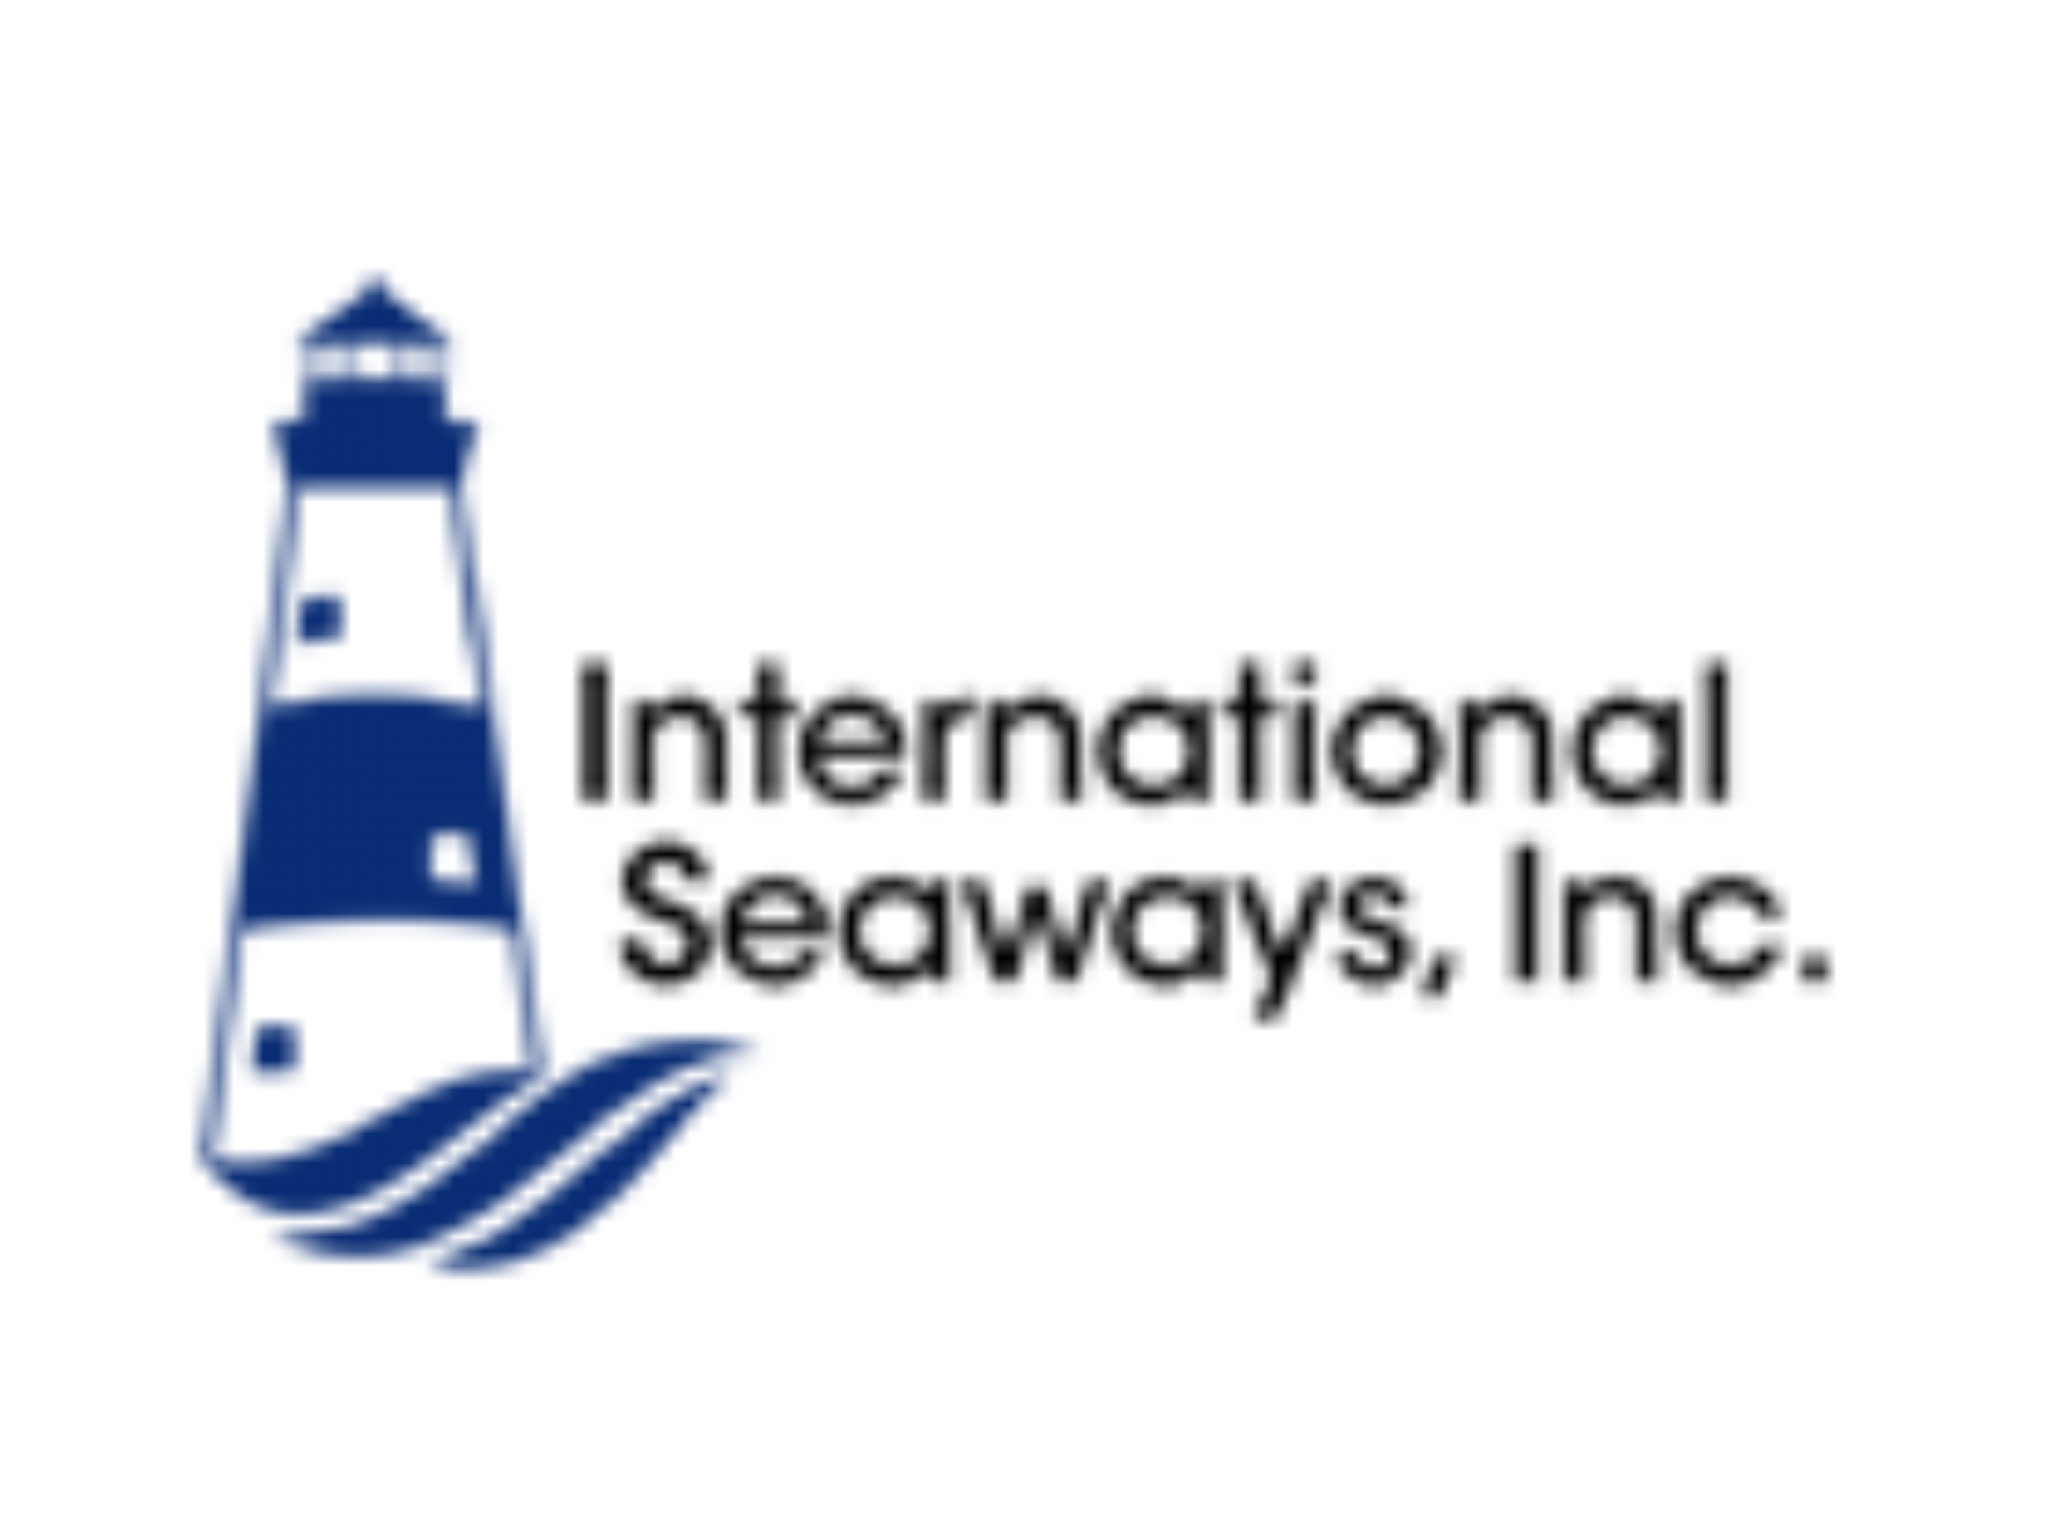  international-seaways-tops-q2-estimates-on-strong-tce-revenues 